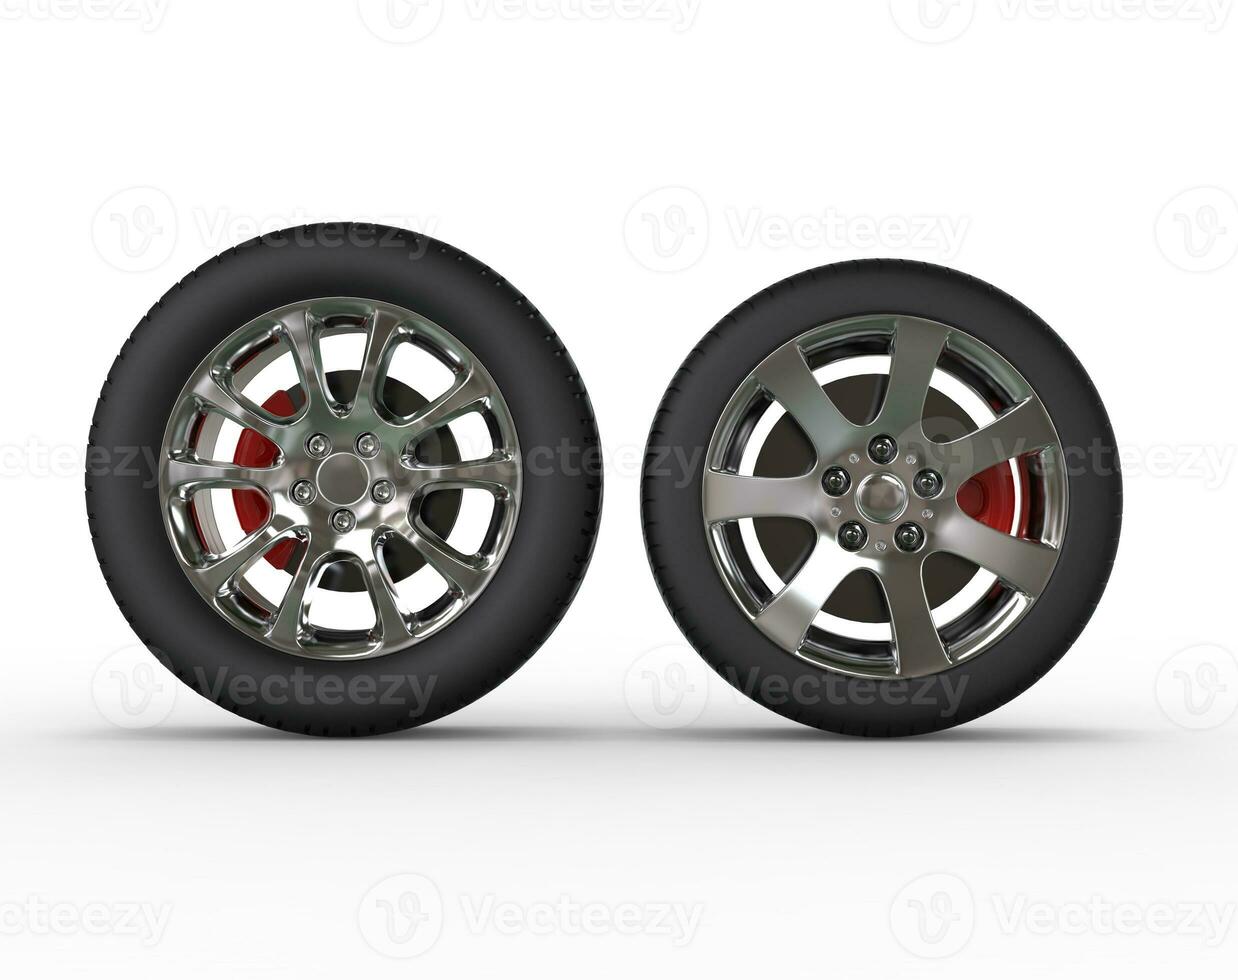 Regular car wheels - front view photo